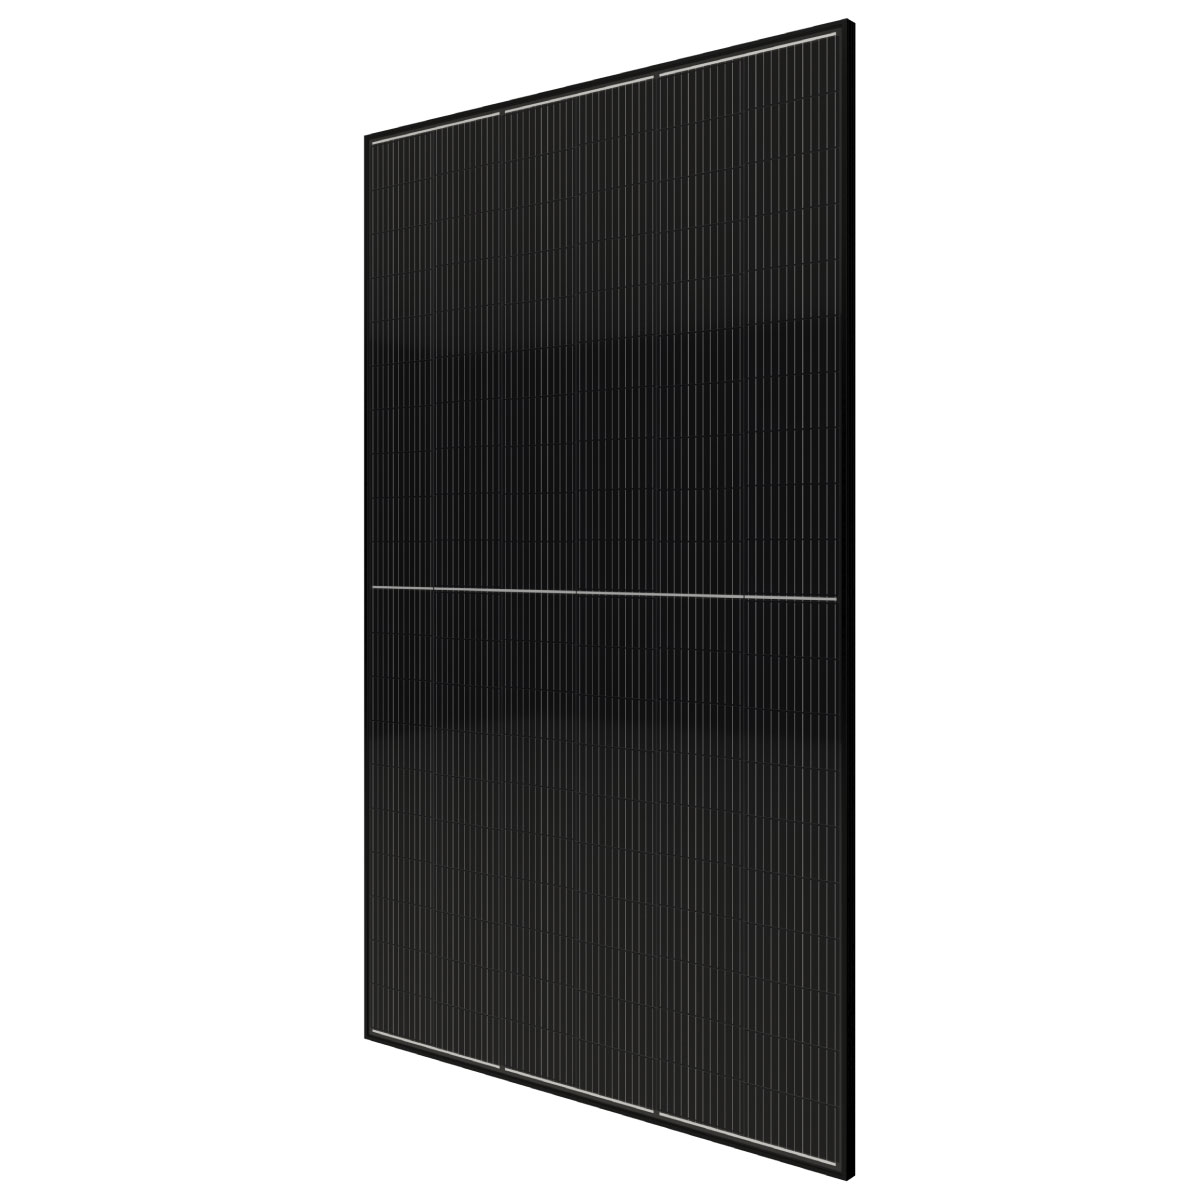 TommaTech 610Wp 120PM M12 Dark Series Solar Panel